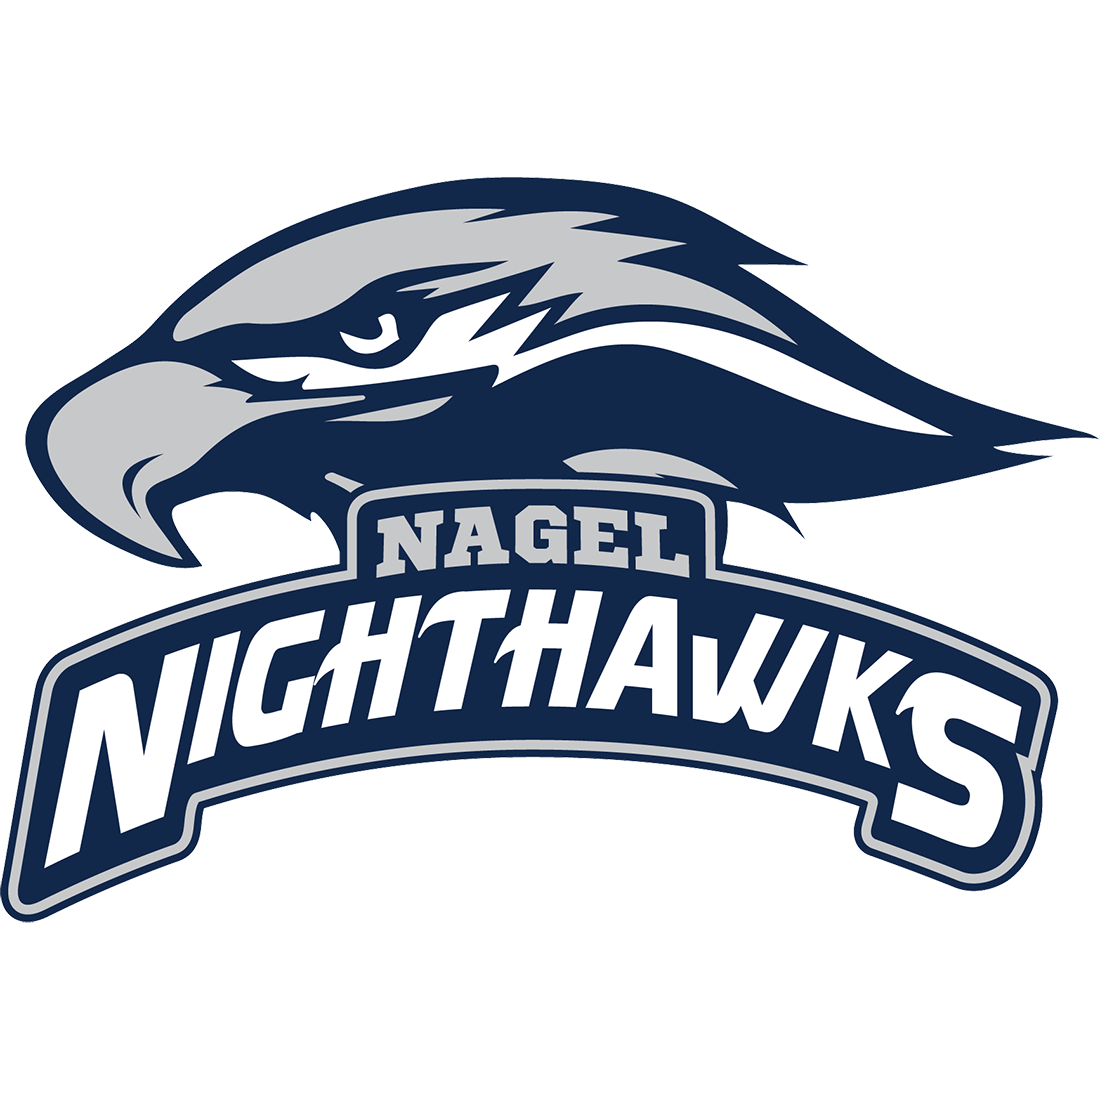 Nagel Nighthawks logo